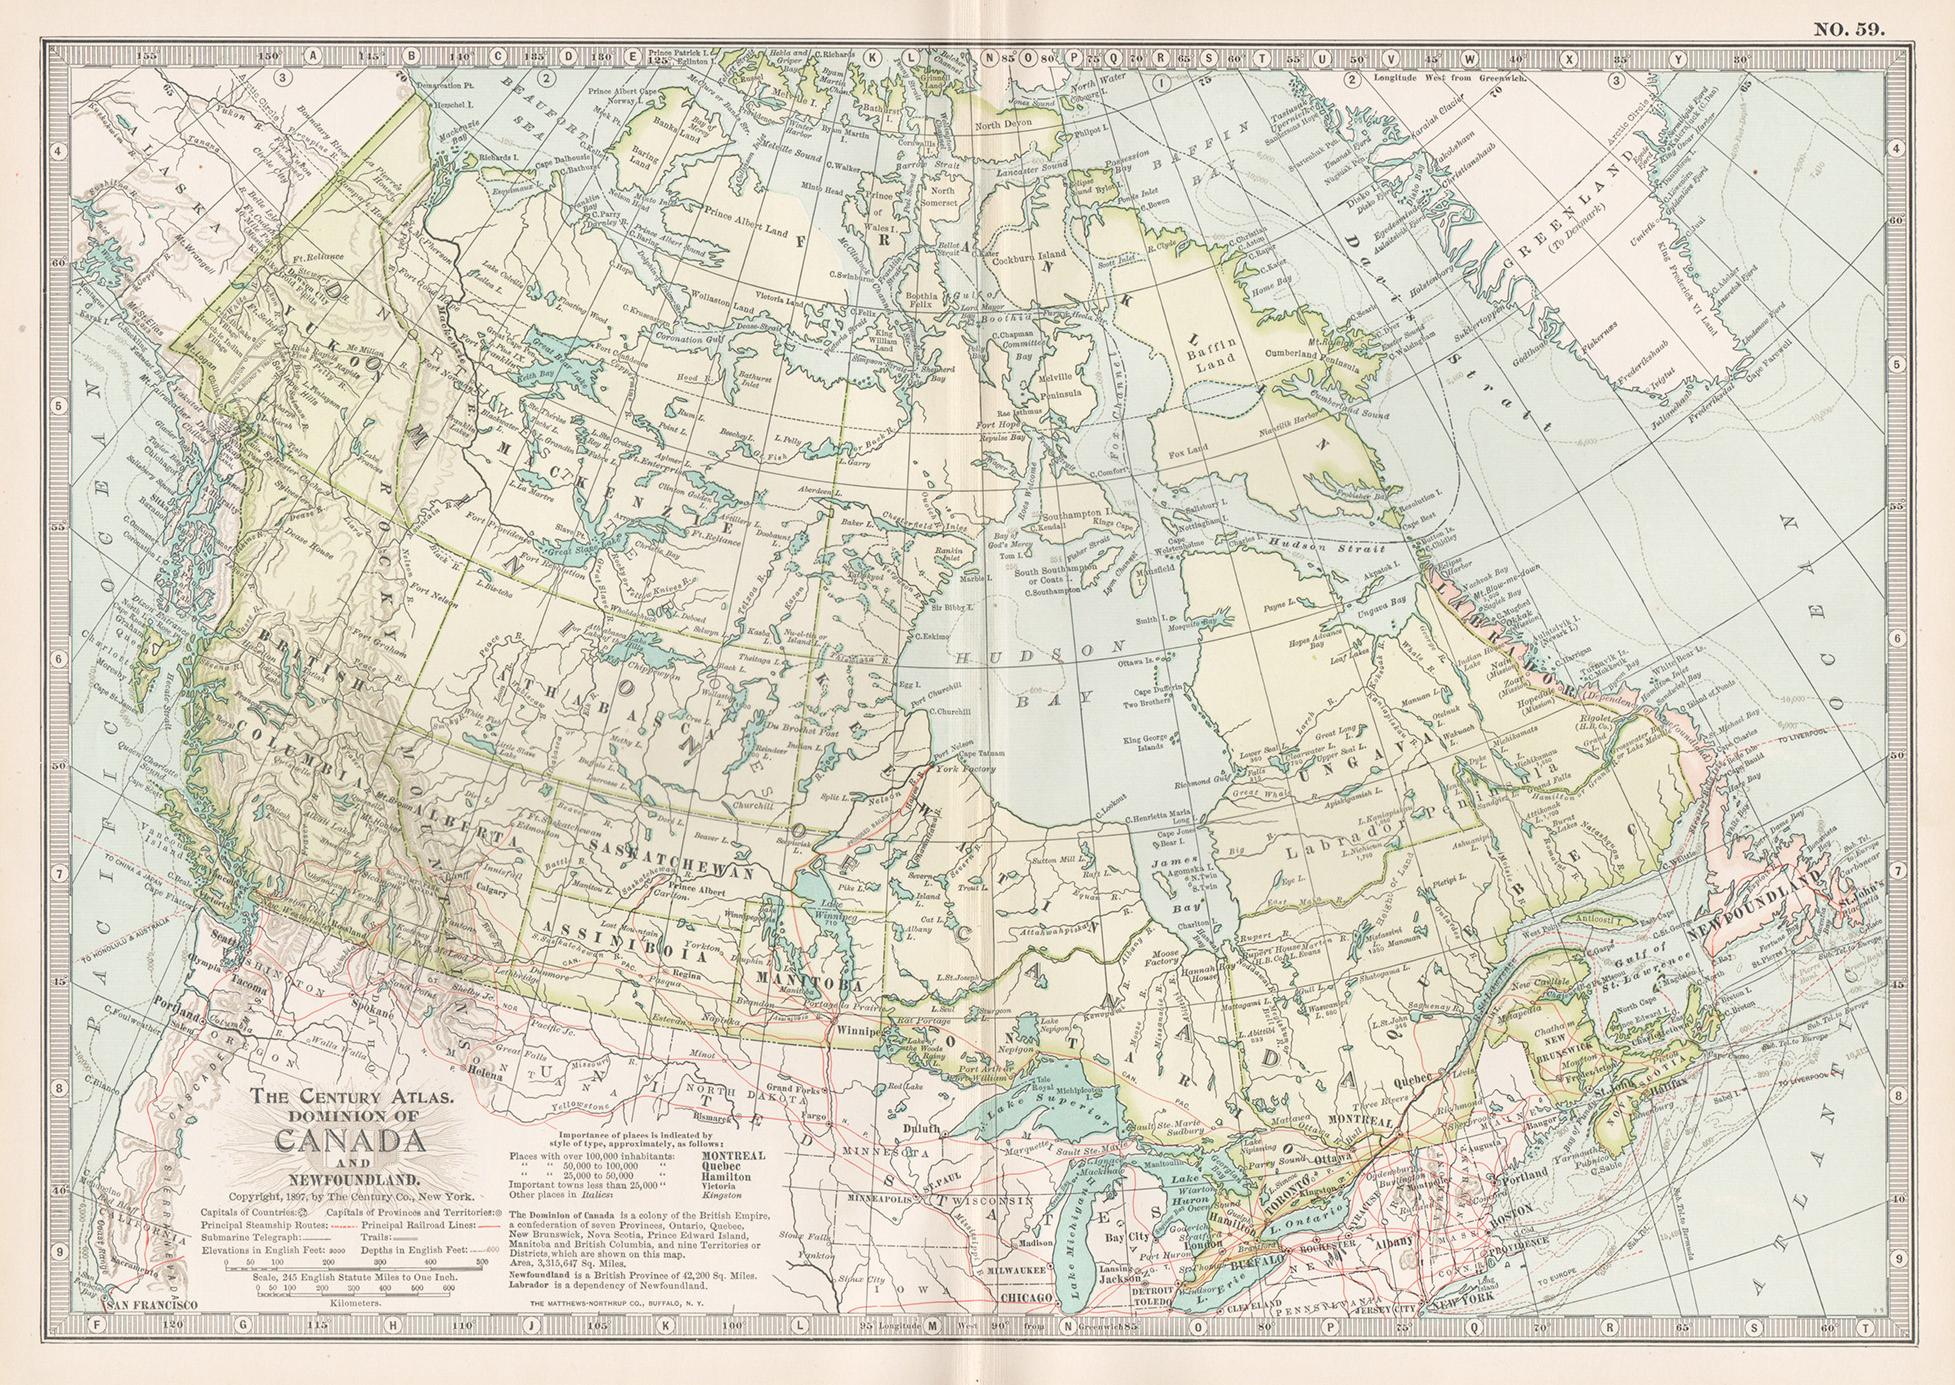 Unknown Print - Canada and Newfoundland. Century Atlas antique vintage map